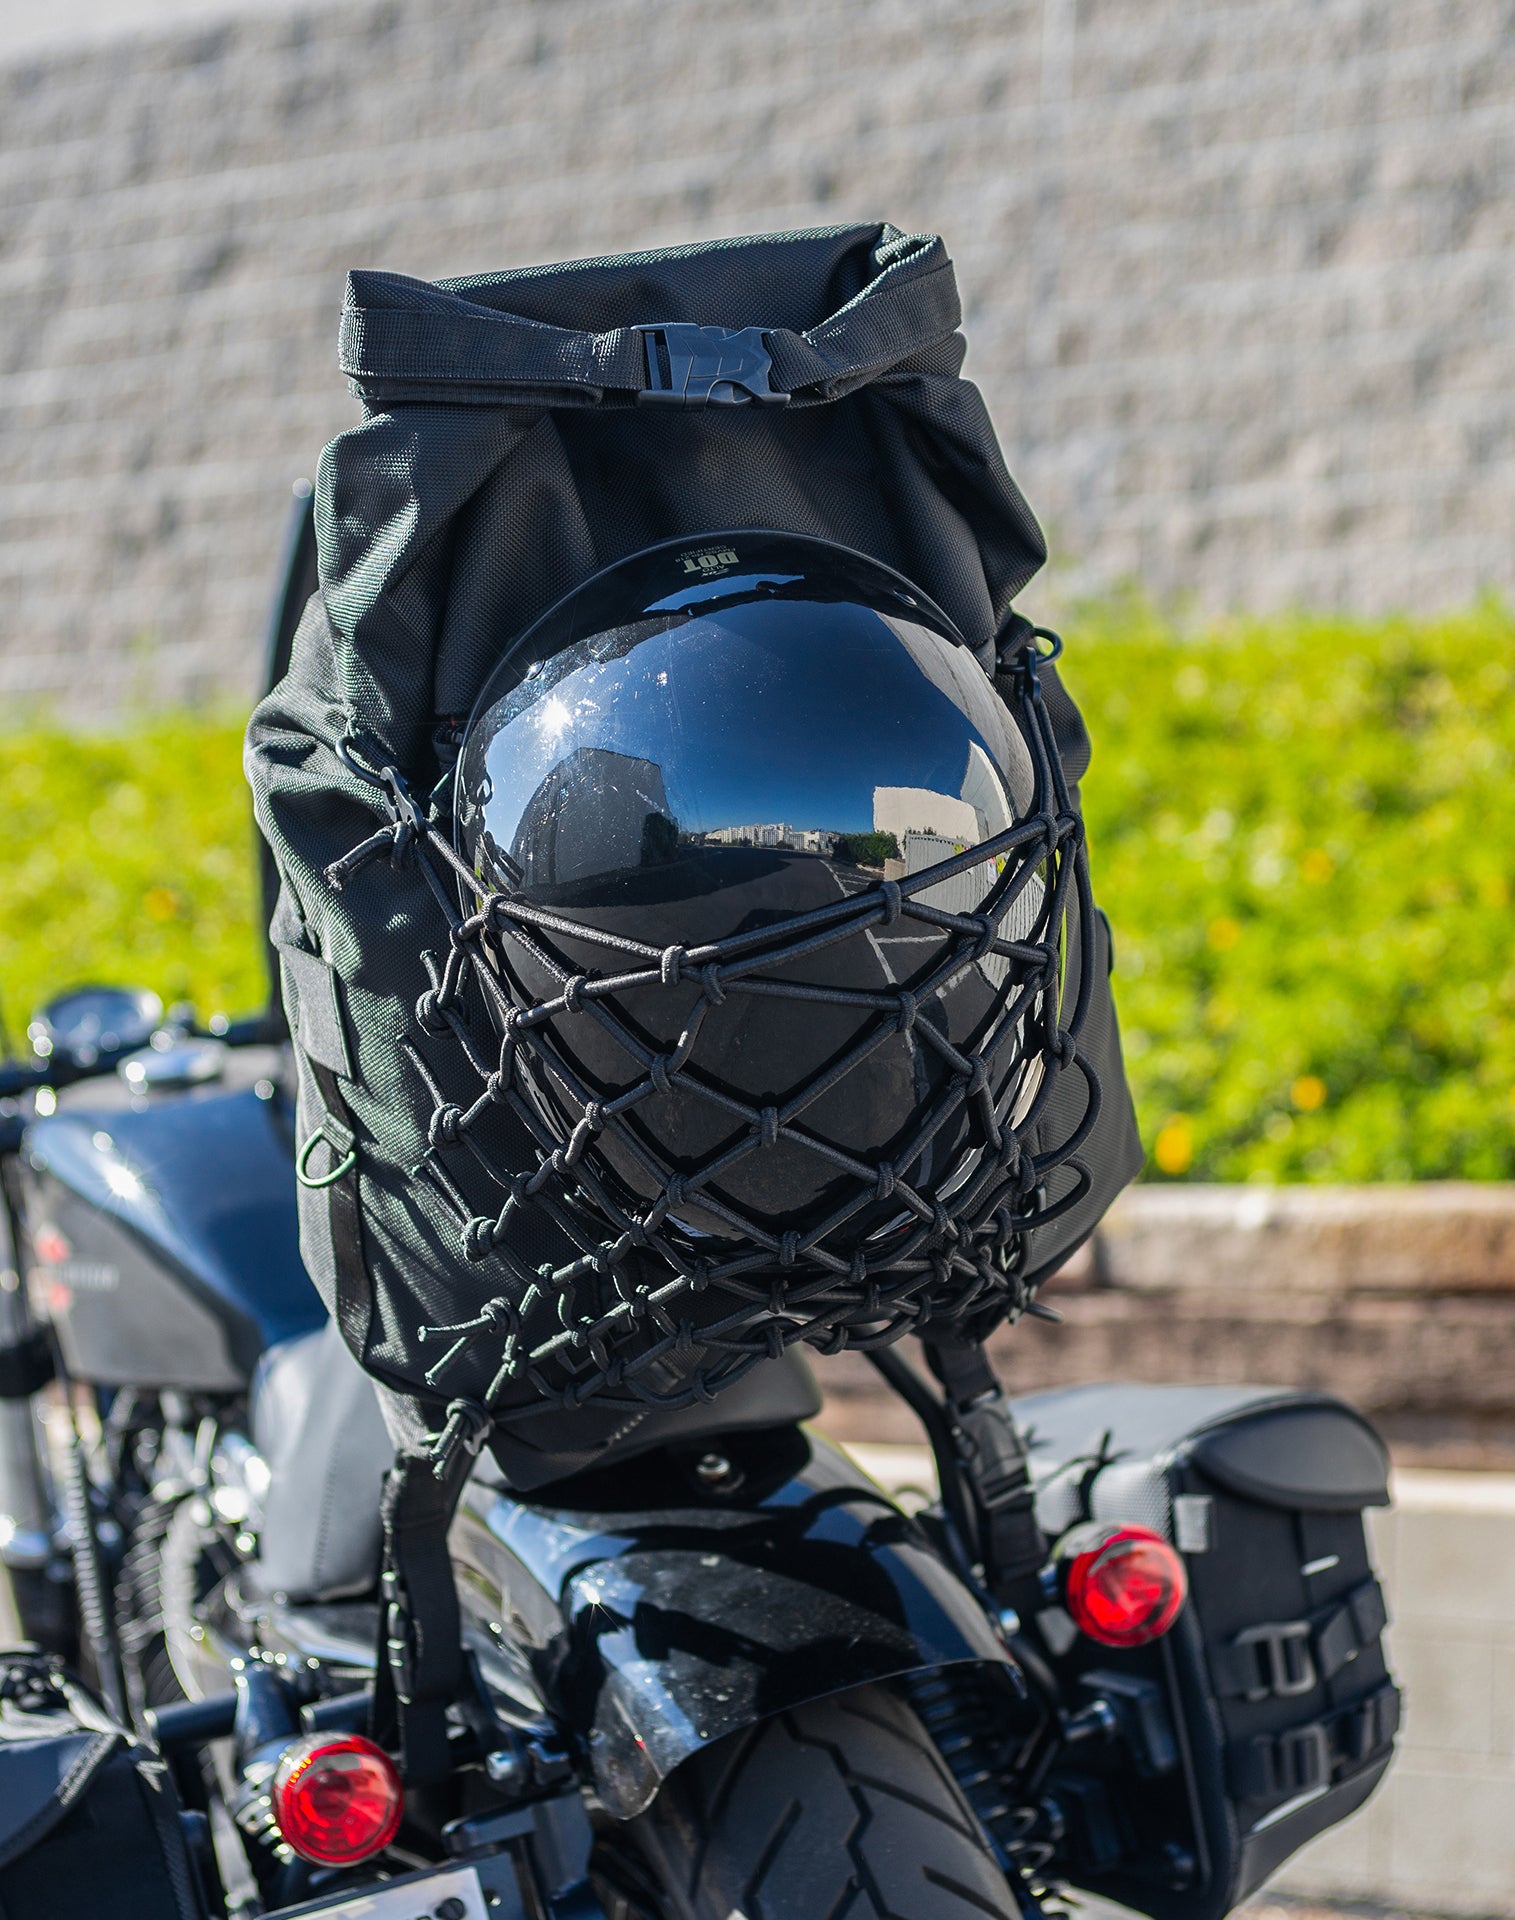 32L - Vanguard Large Dry Hyosung Motorcycle Tail Bag